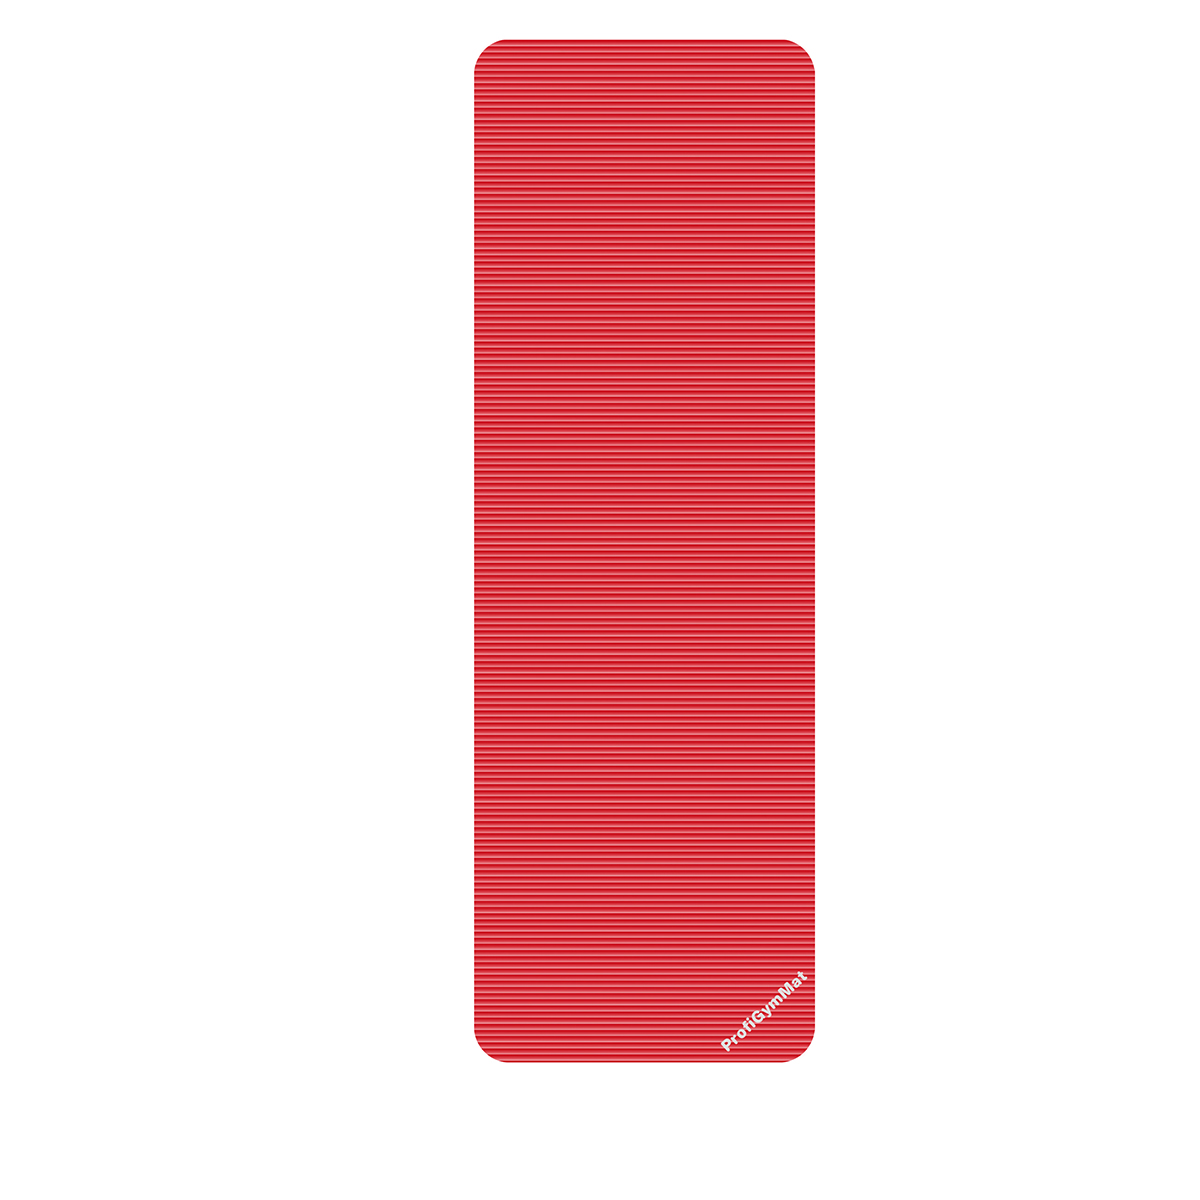 CanDo Podložka na cvičení Profi, 180x60x1.5 cm, červená